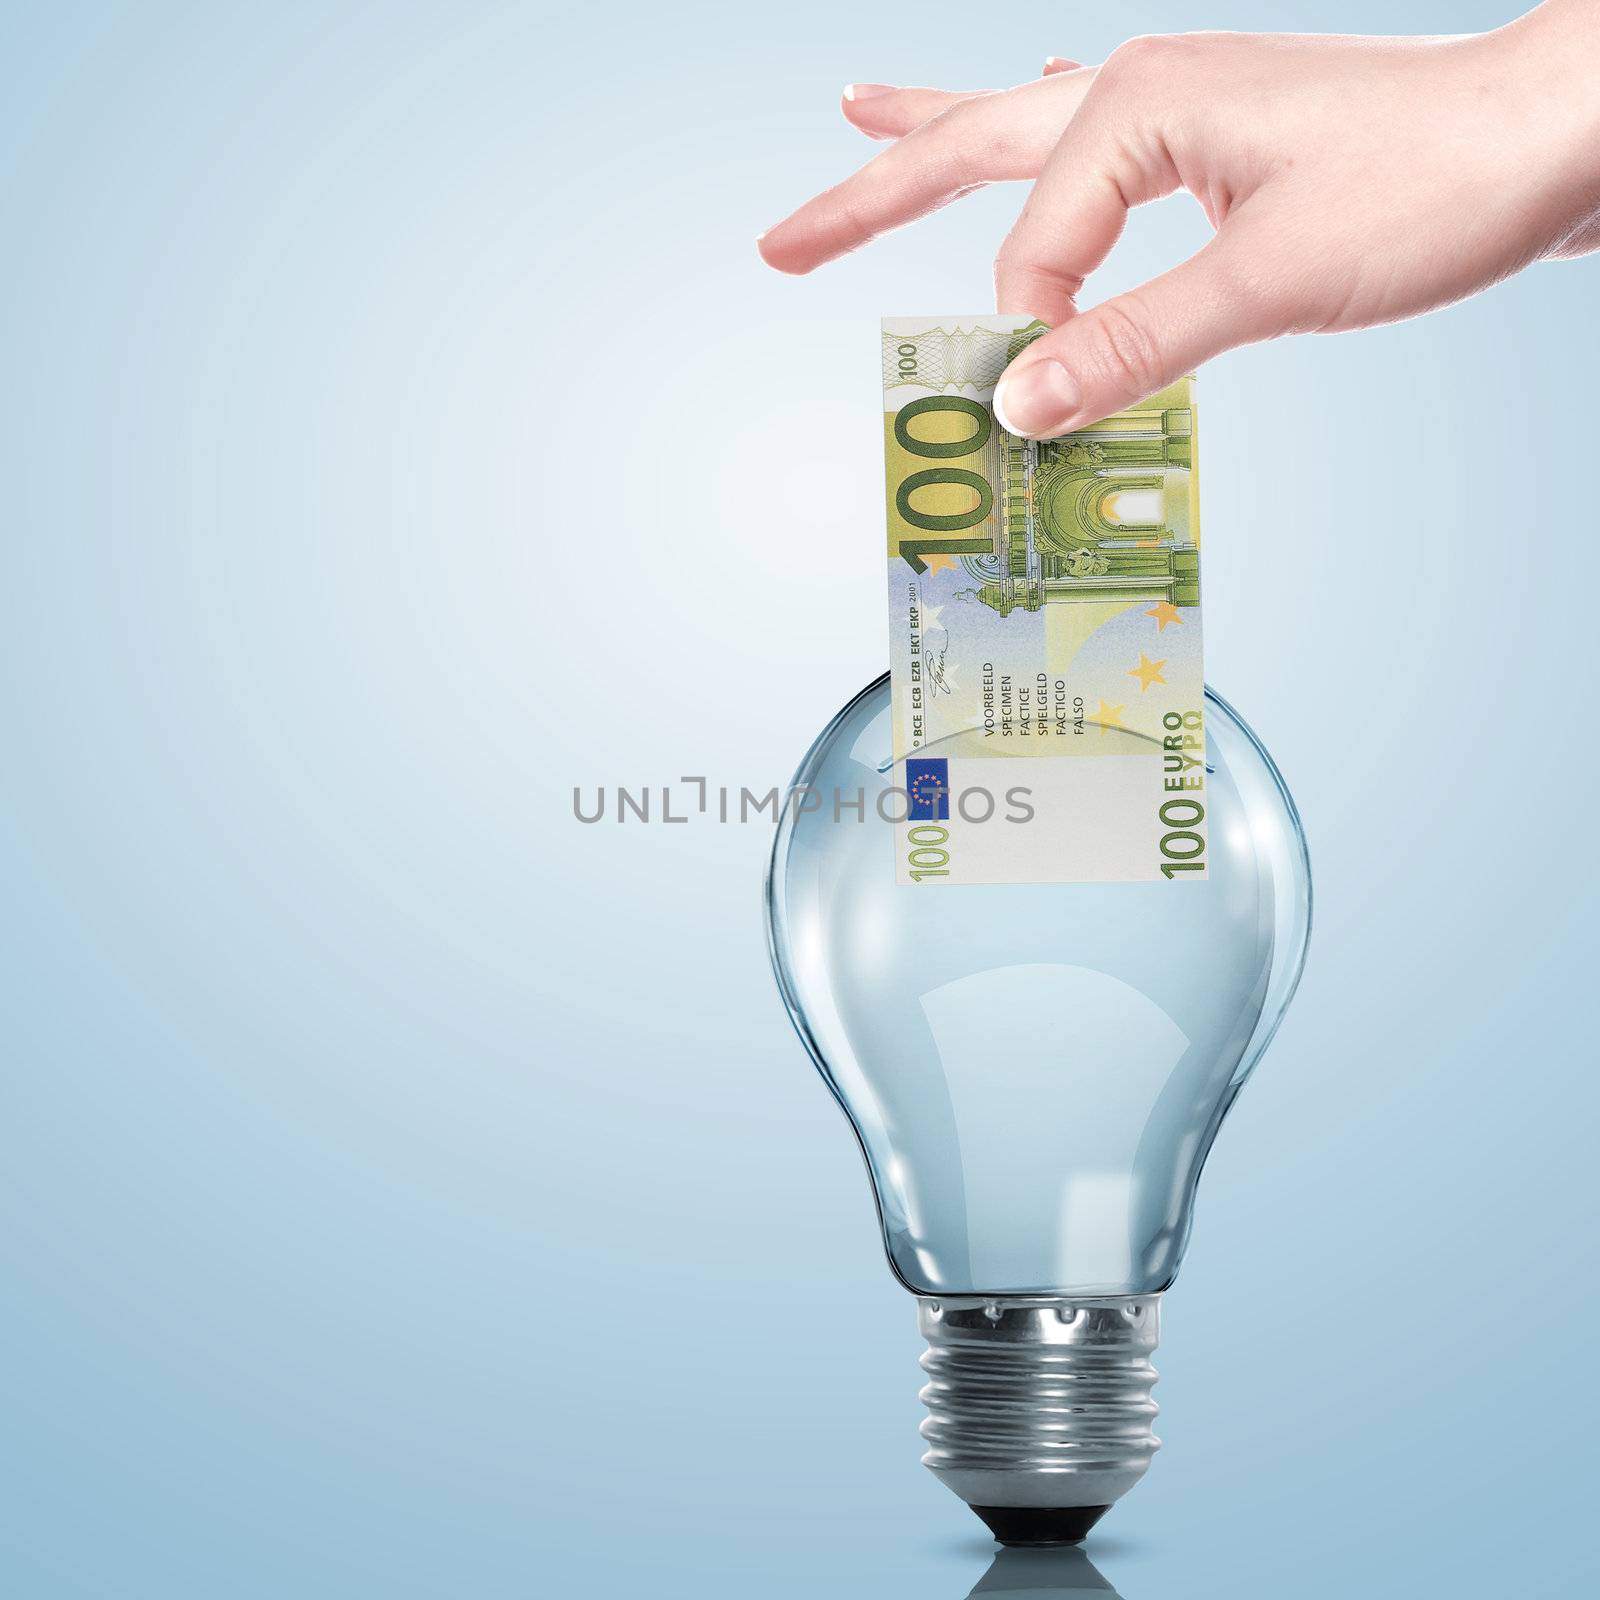 Money inside an electric light bulb by sergey_nivens